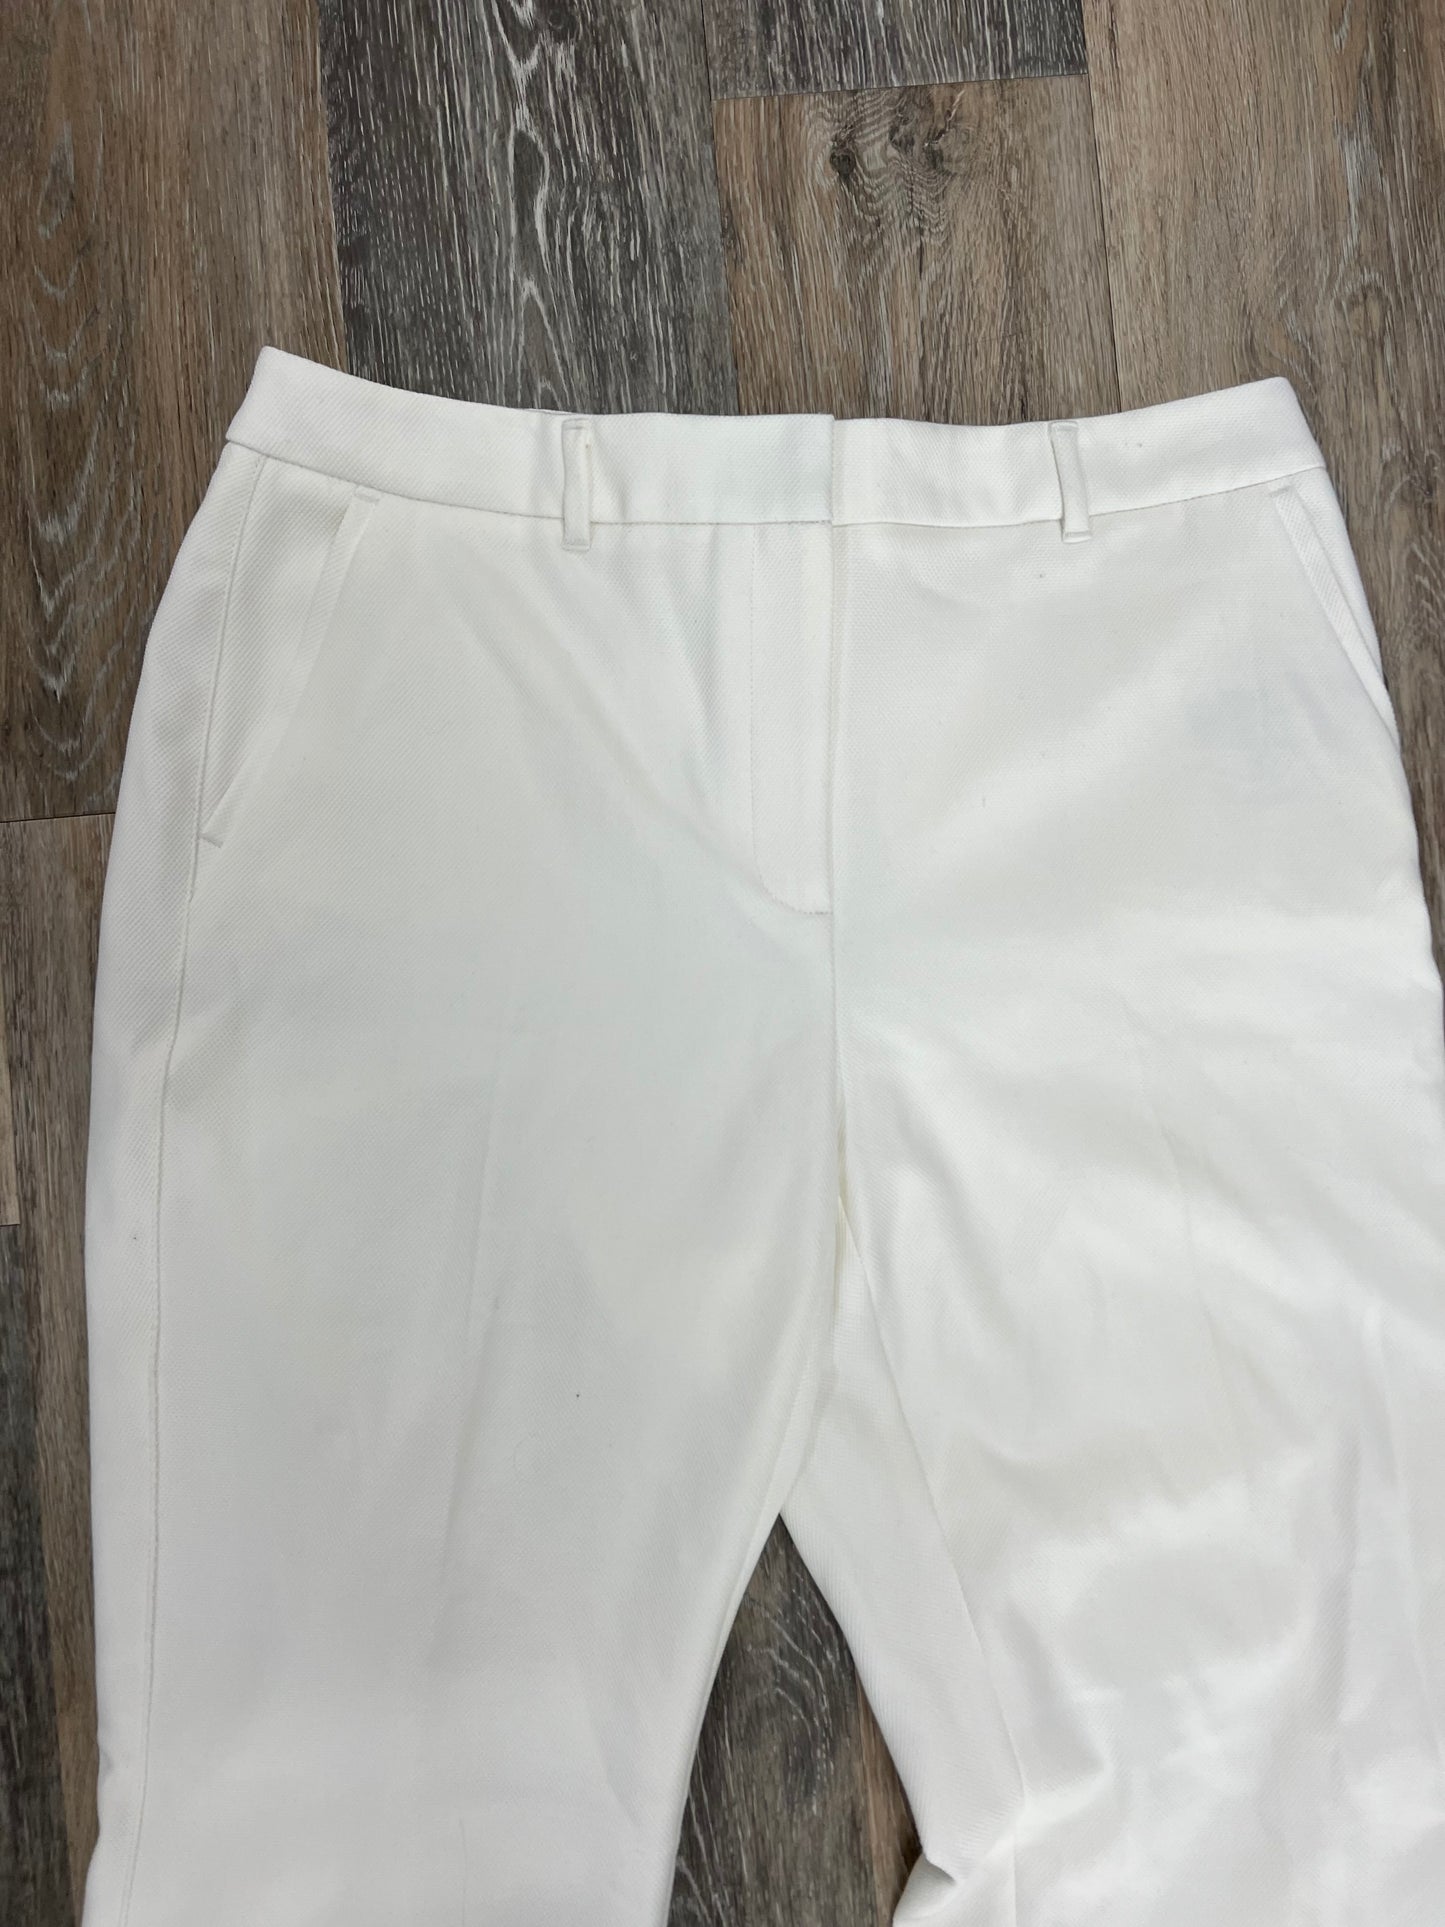 Pants Work By White House Black Market  Size: 10 Short